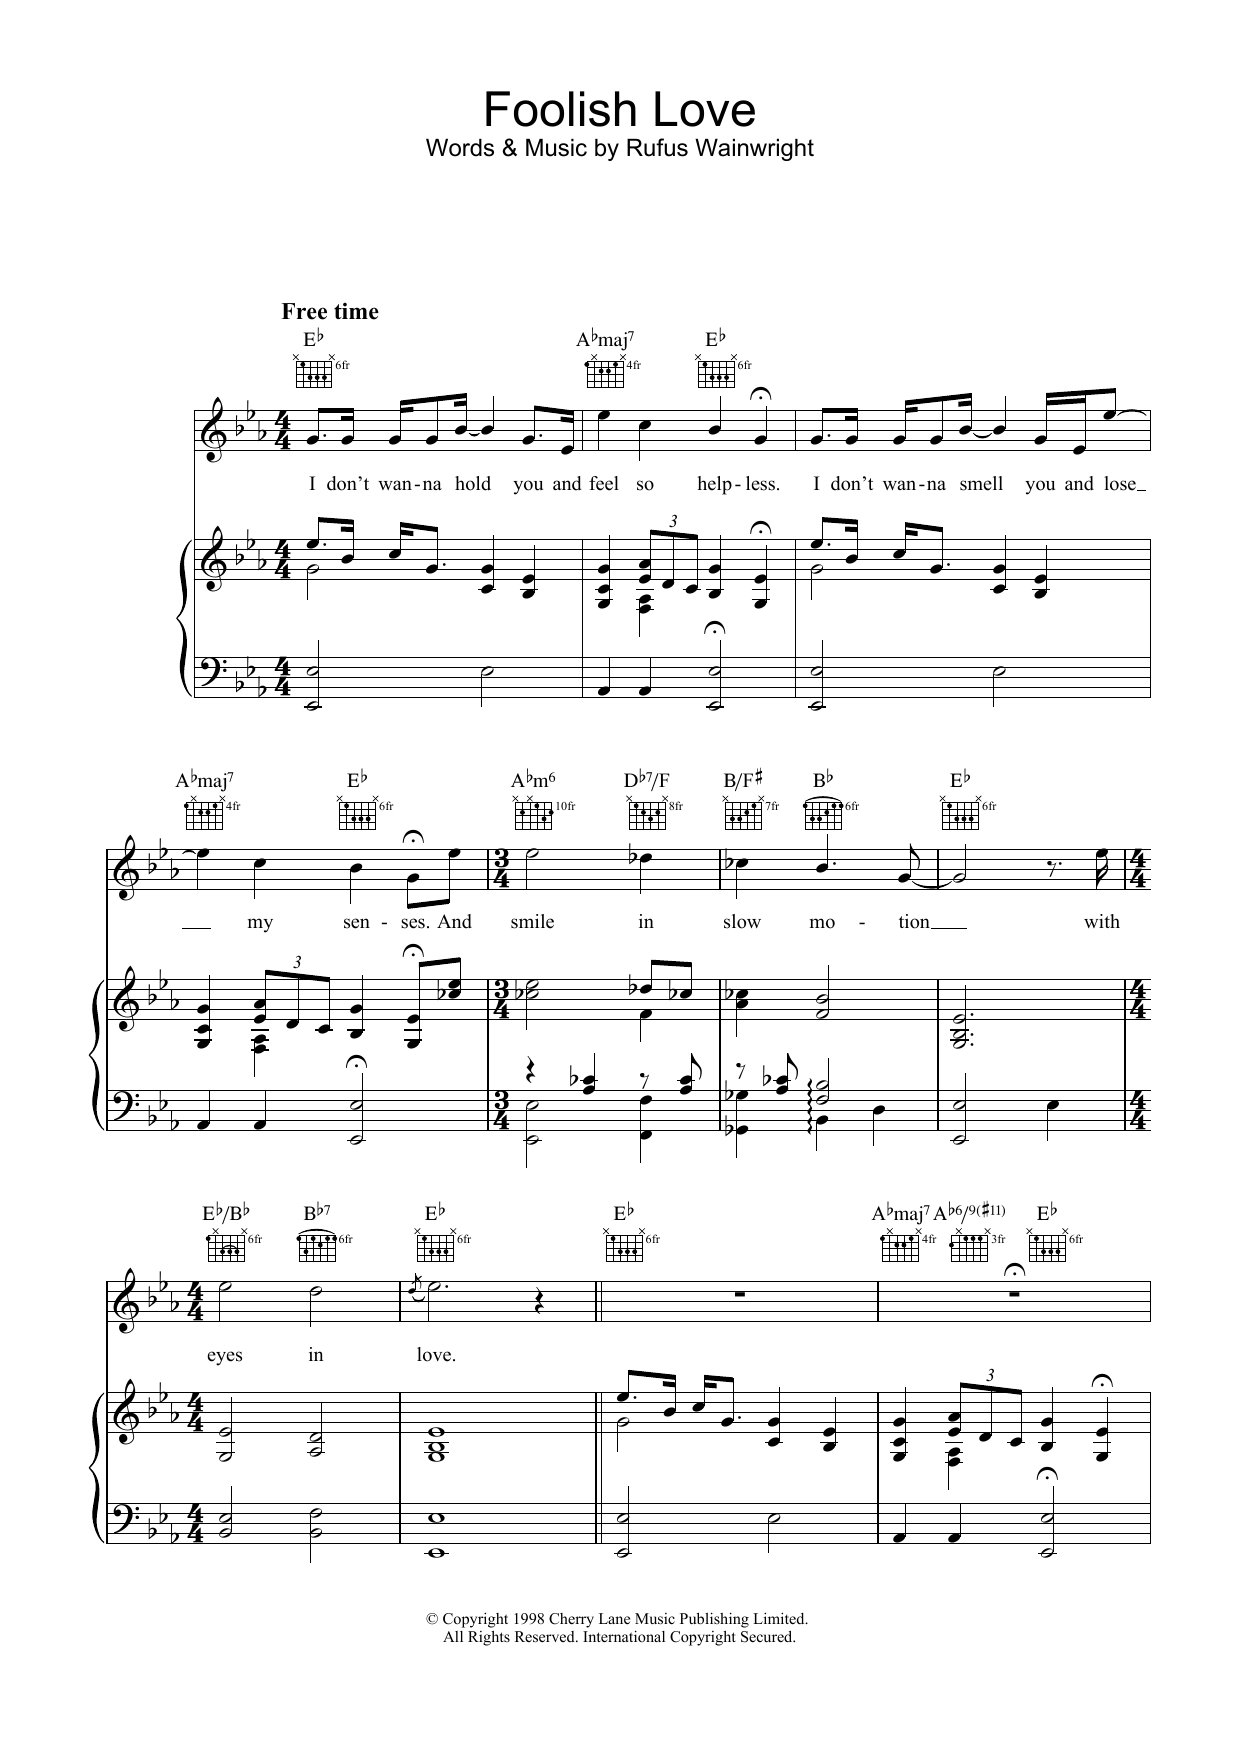 Rufus Wainwright Foolish Love Sheet Music Notes & Chords for Piano, Vocal & Guitar - Download or Print PDF